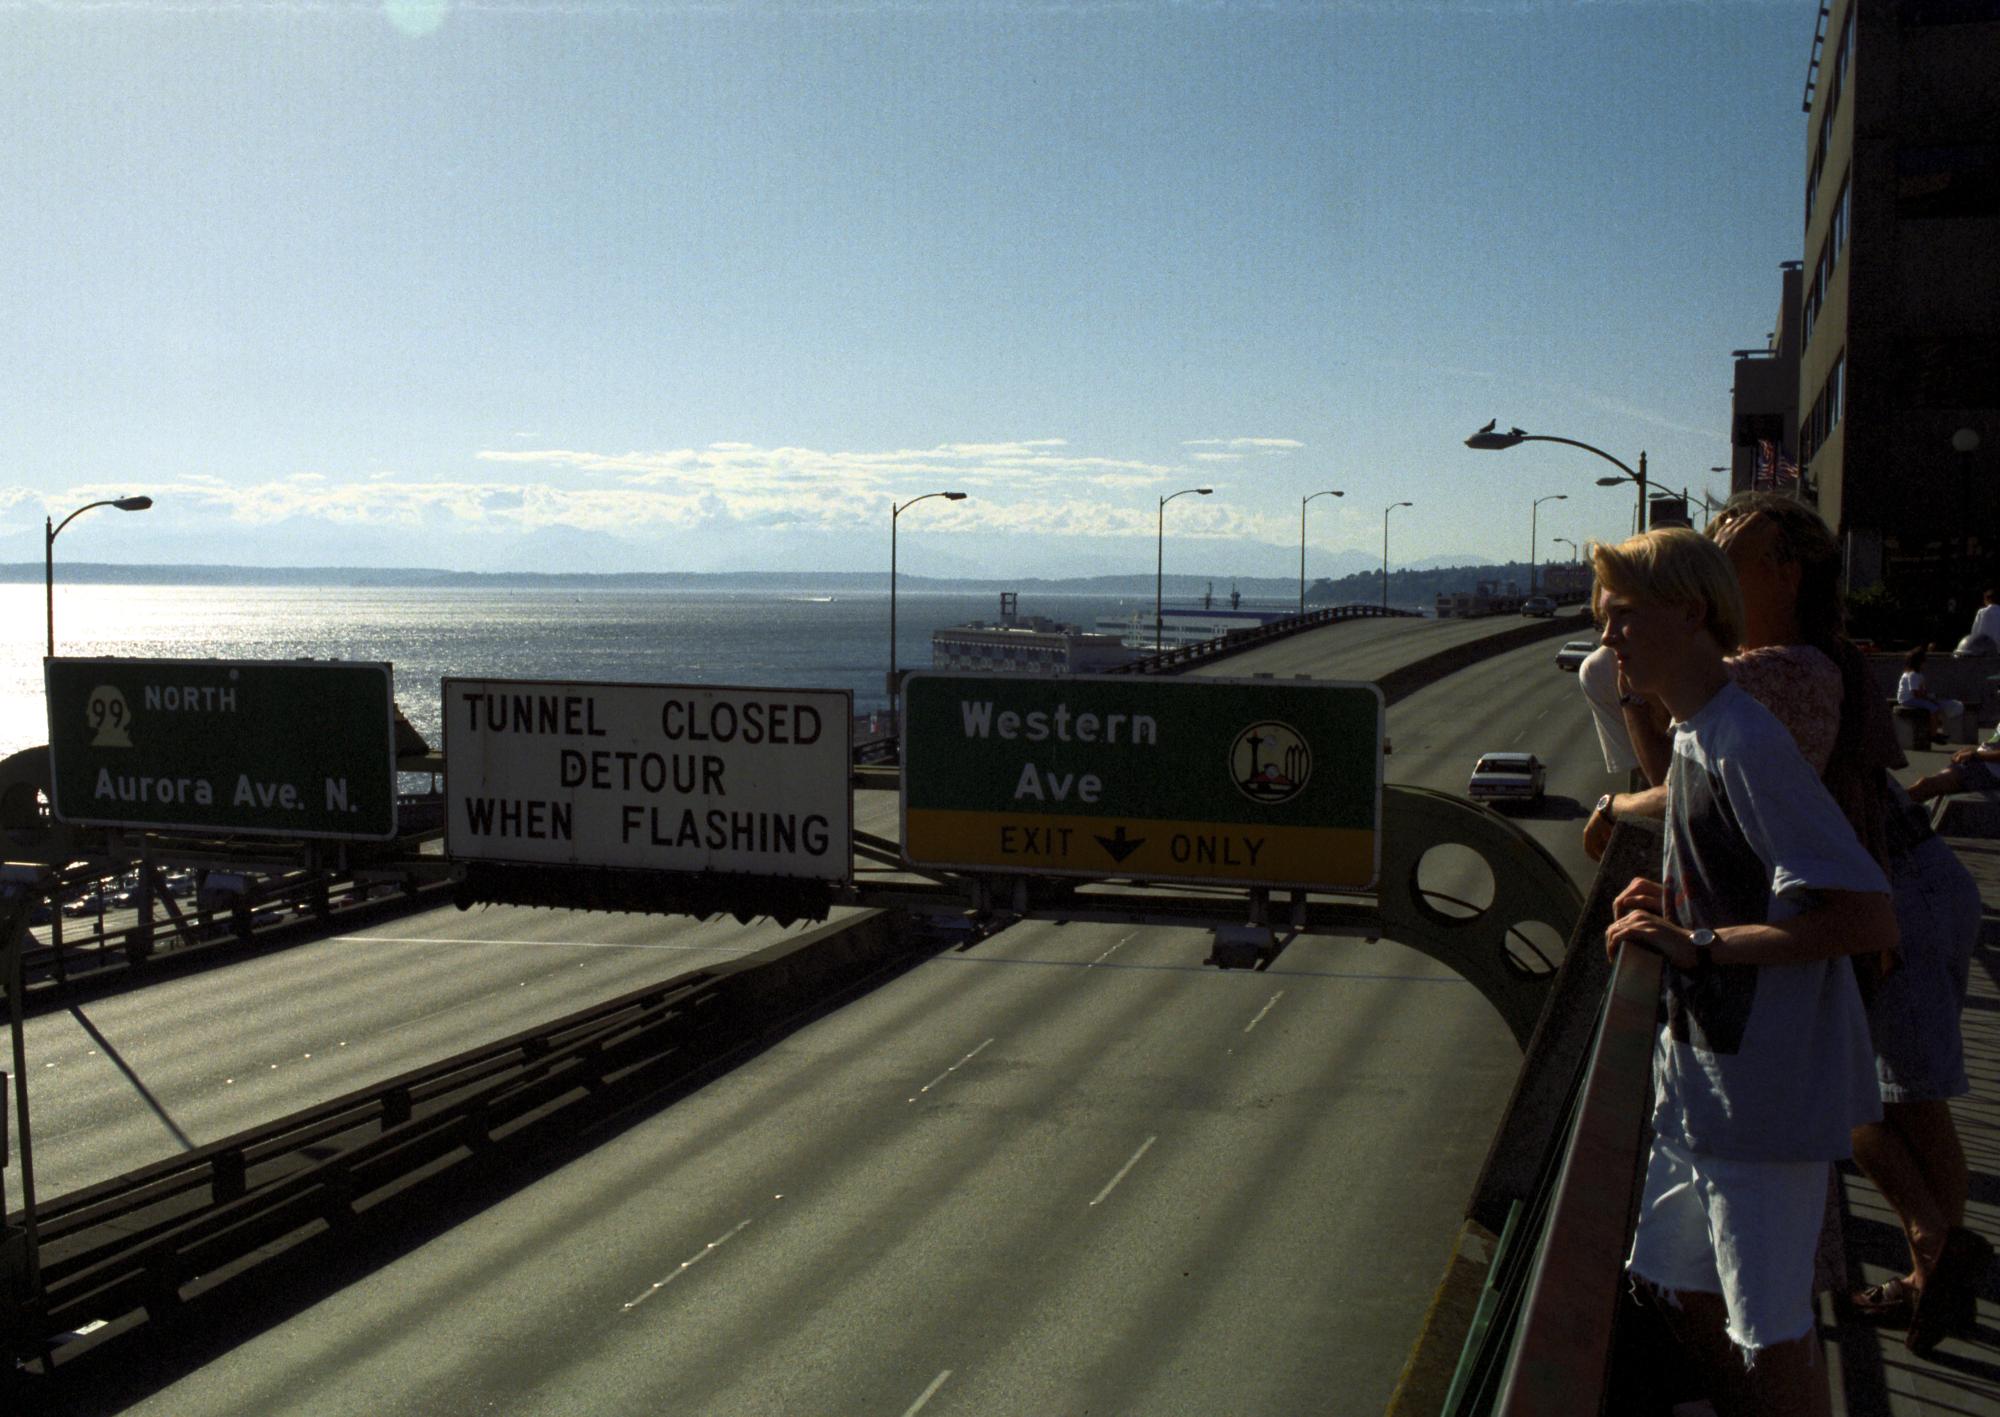 Seattle (1993) - Alaskan Way Viaduct #2